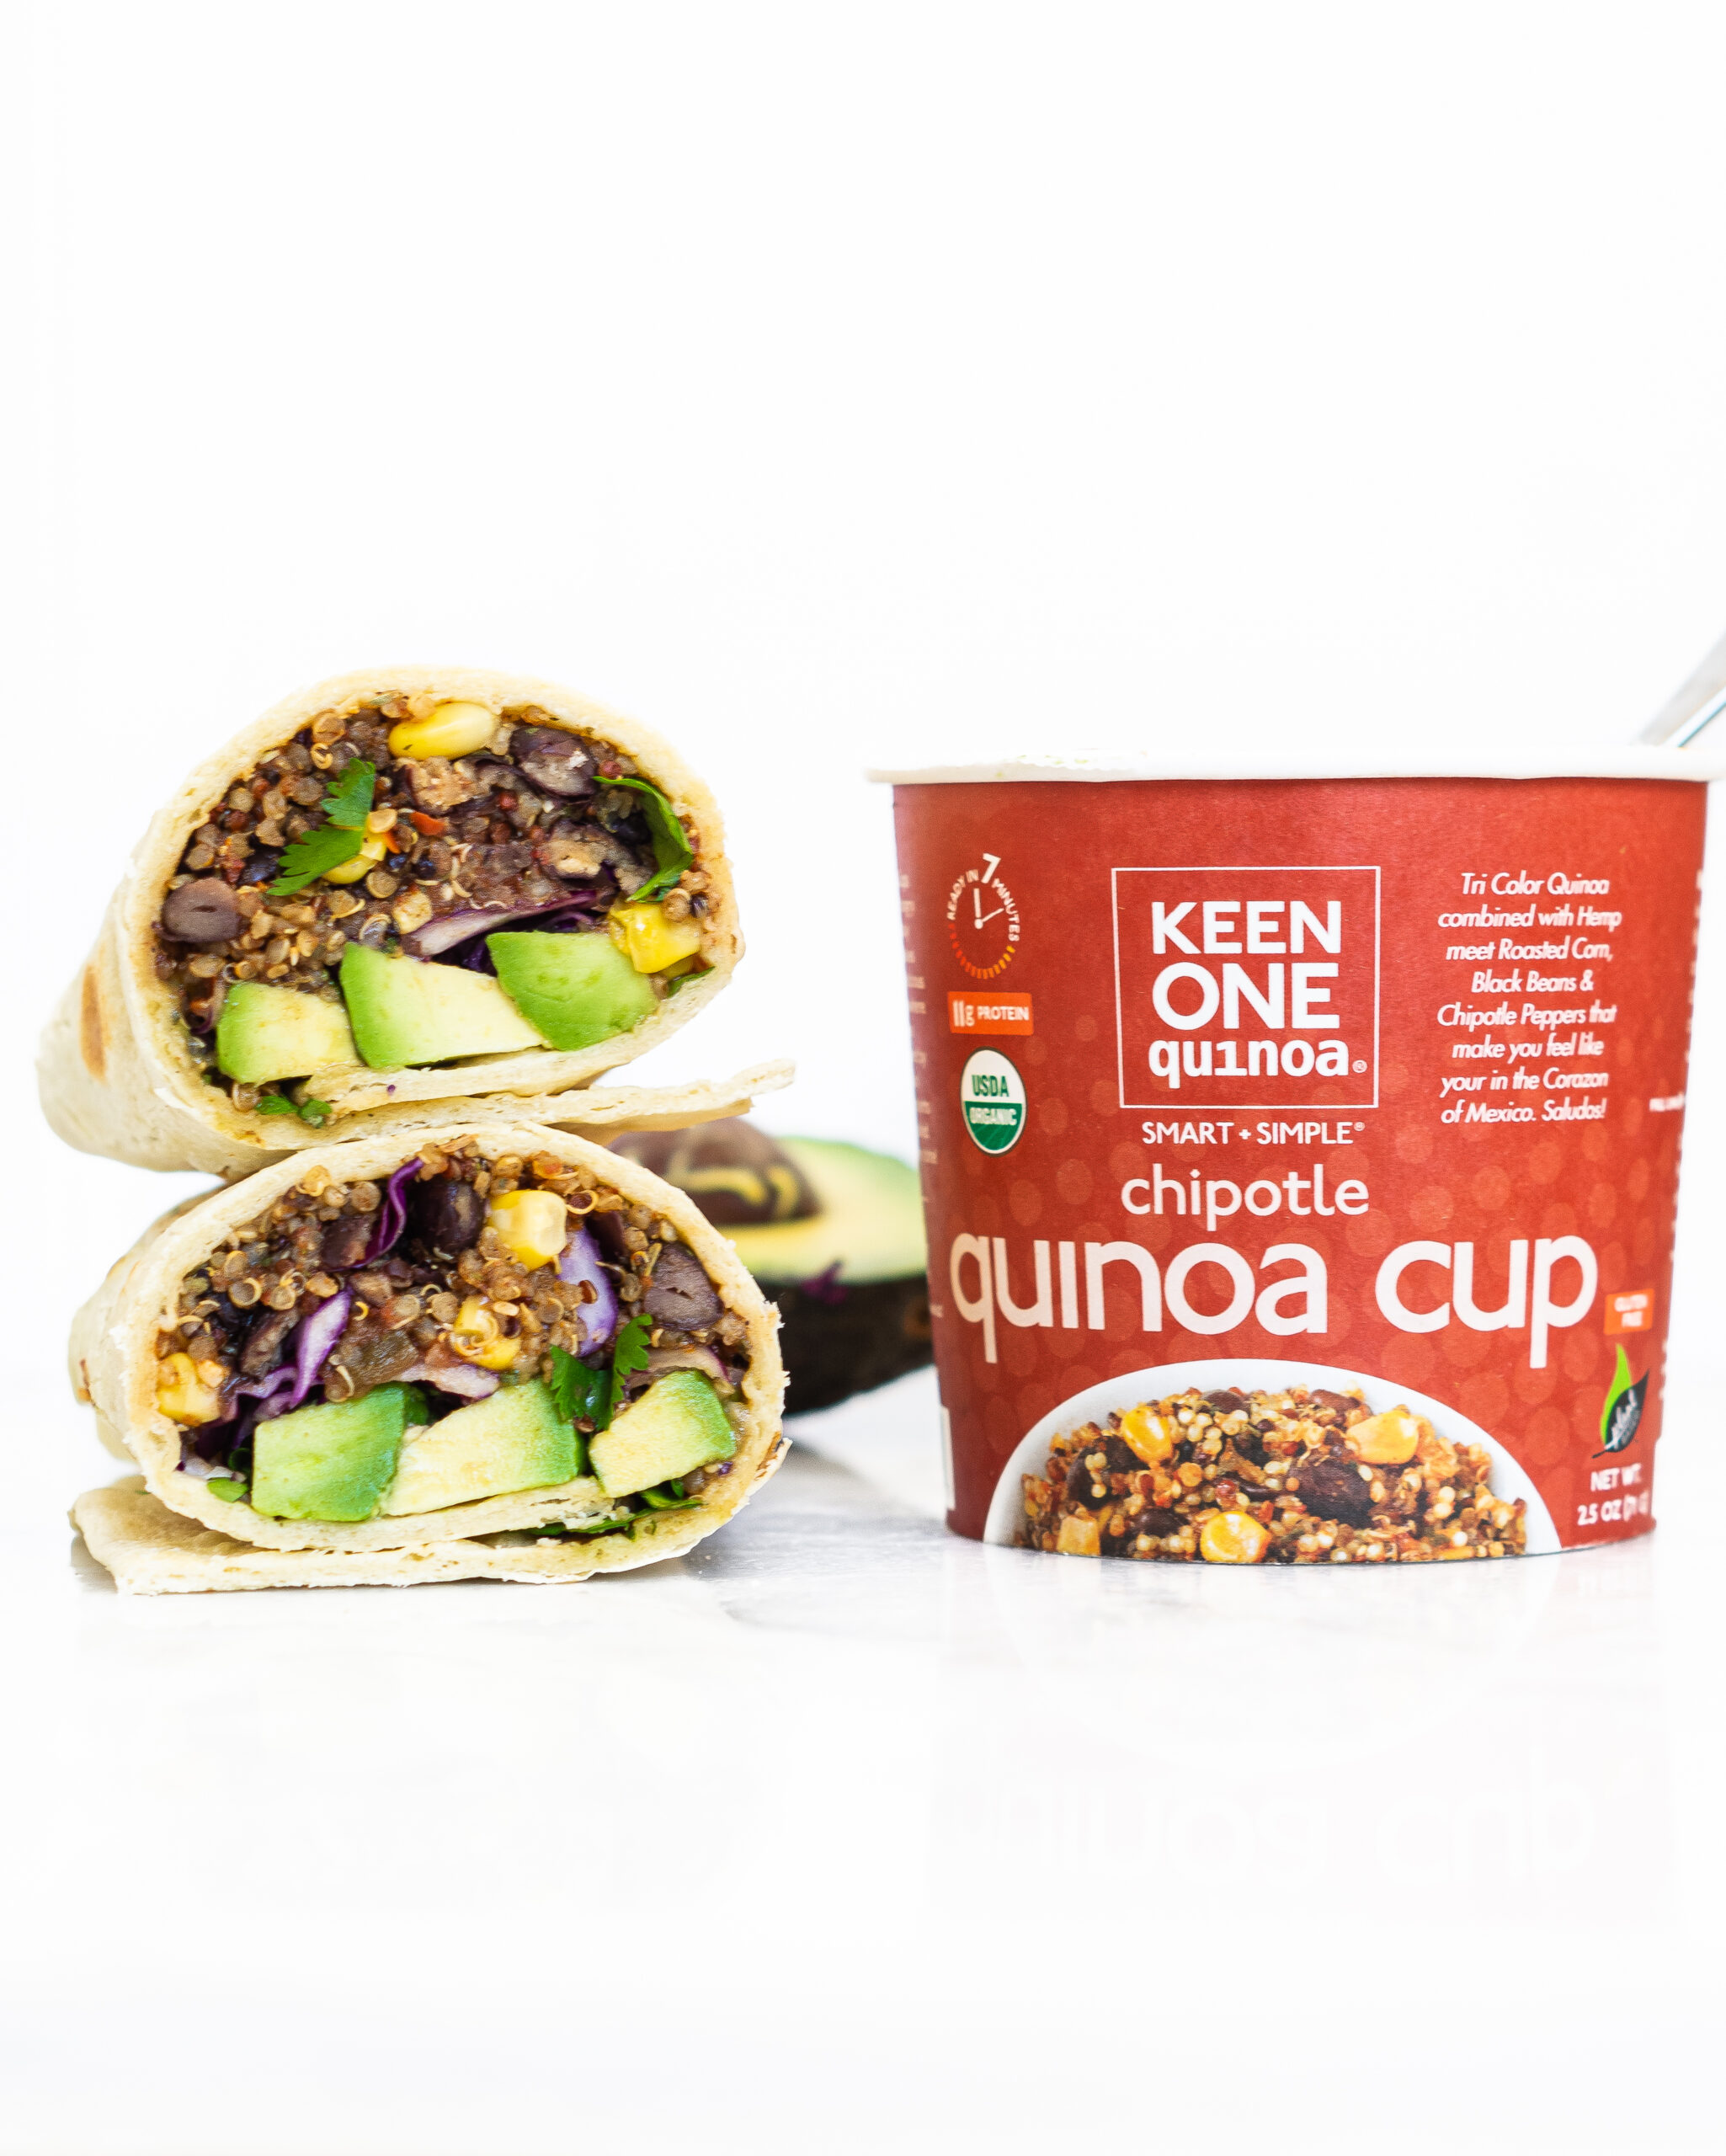 Keen One Quinoa Chipotle Wrap